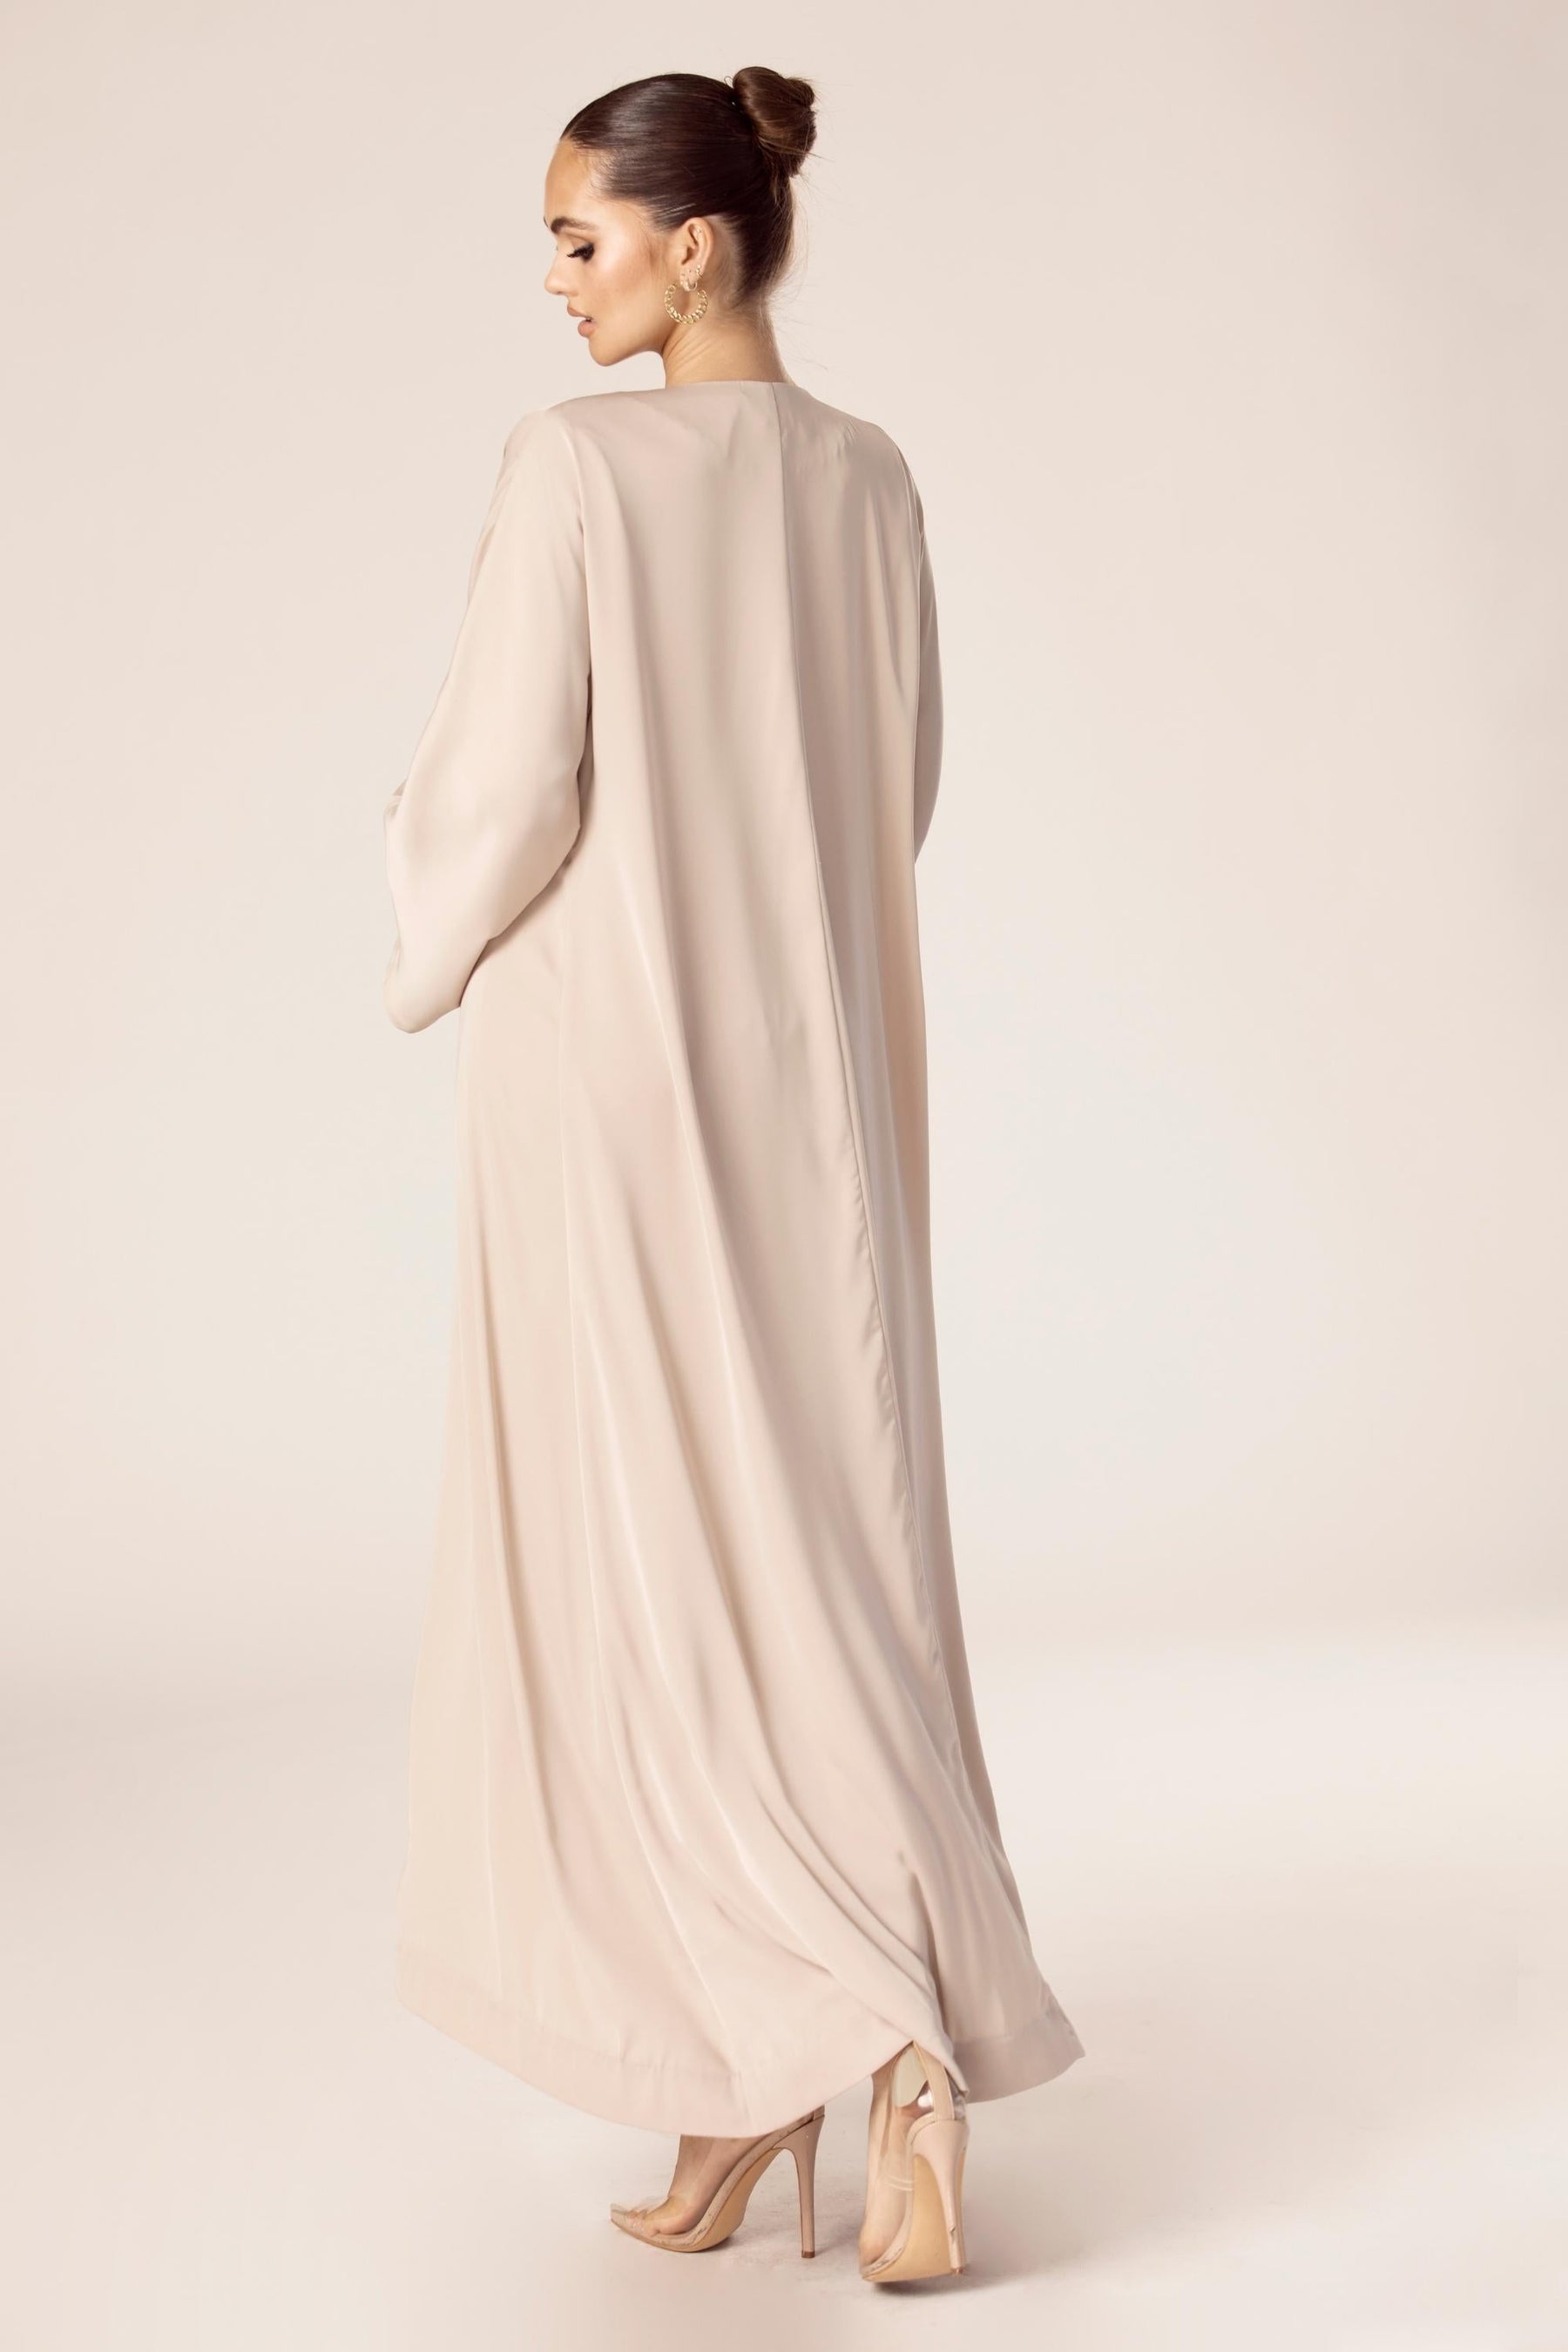 Angelina Open Abaya - Taupe Veiled Collection 